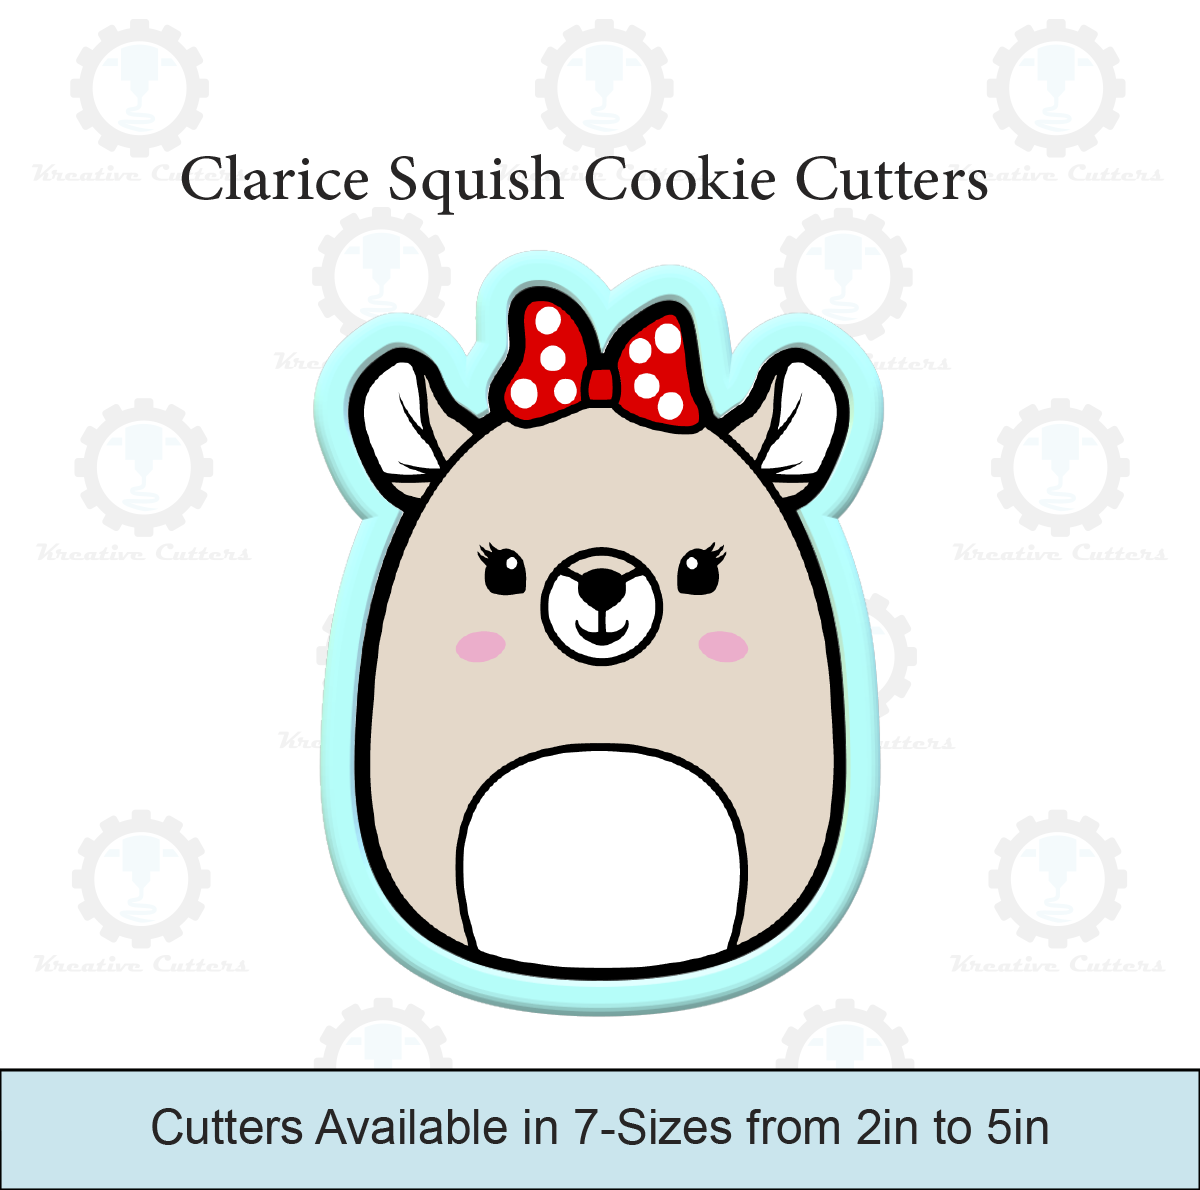 Clarice Squish Cookie Cutters